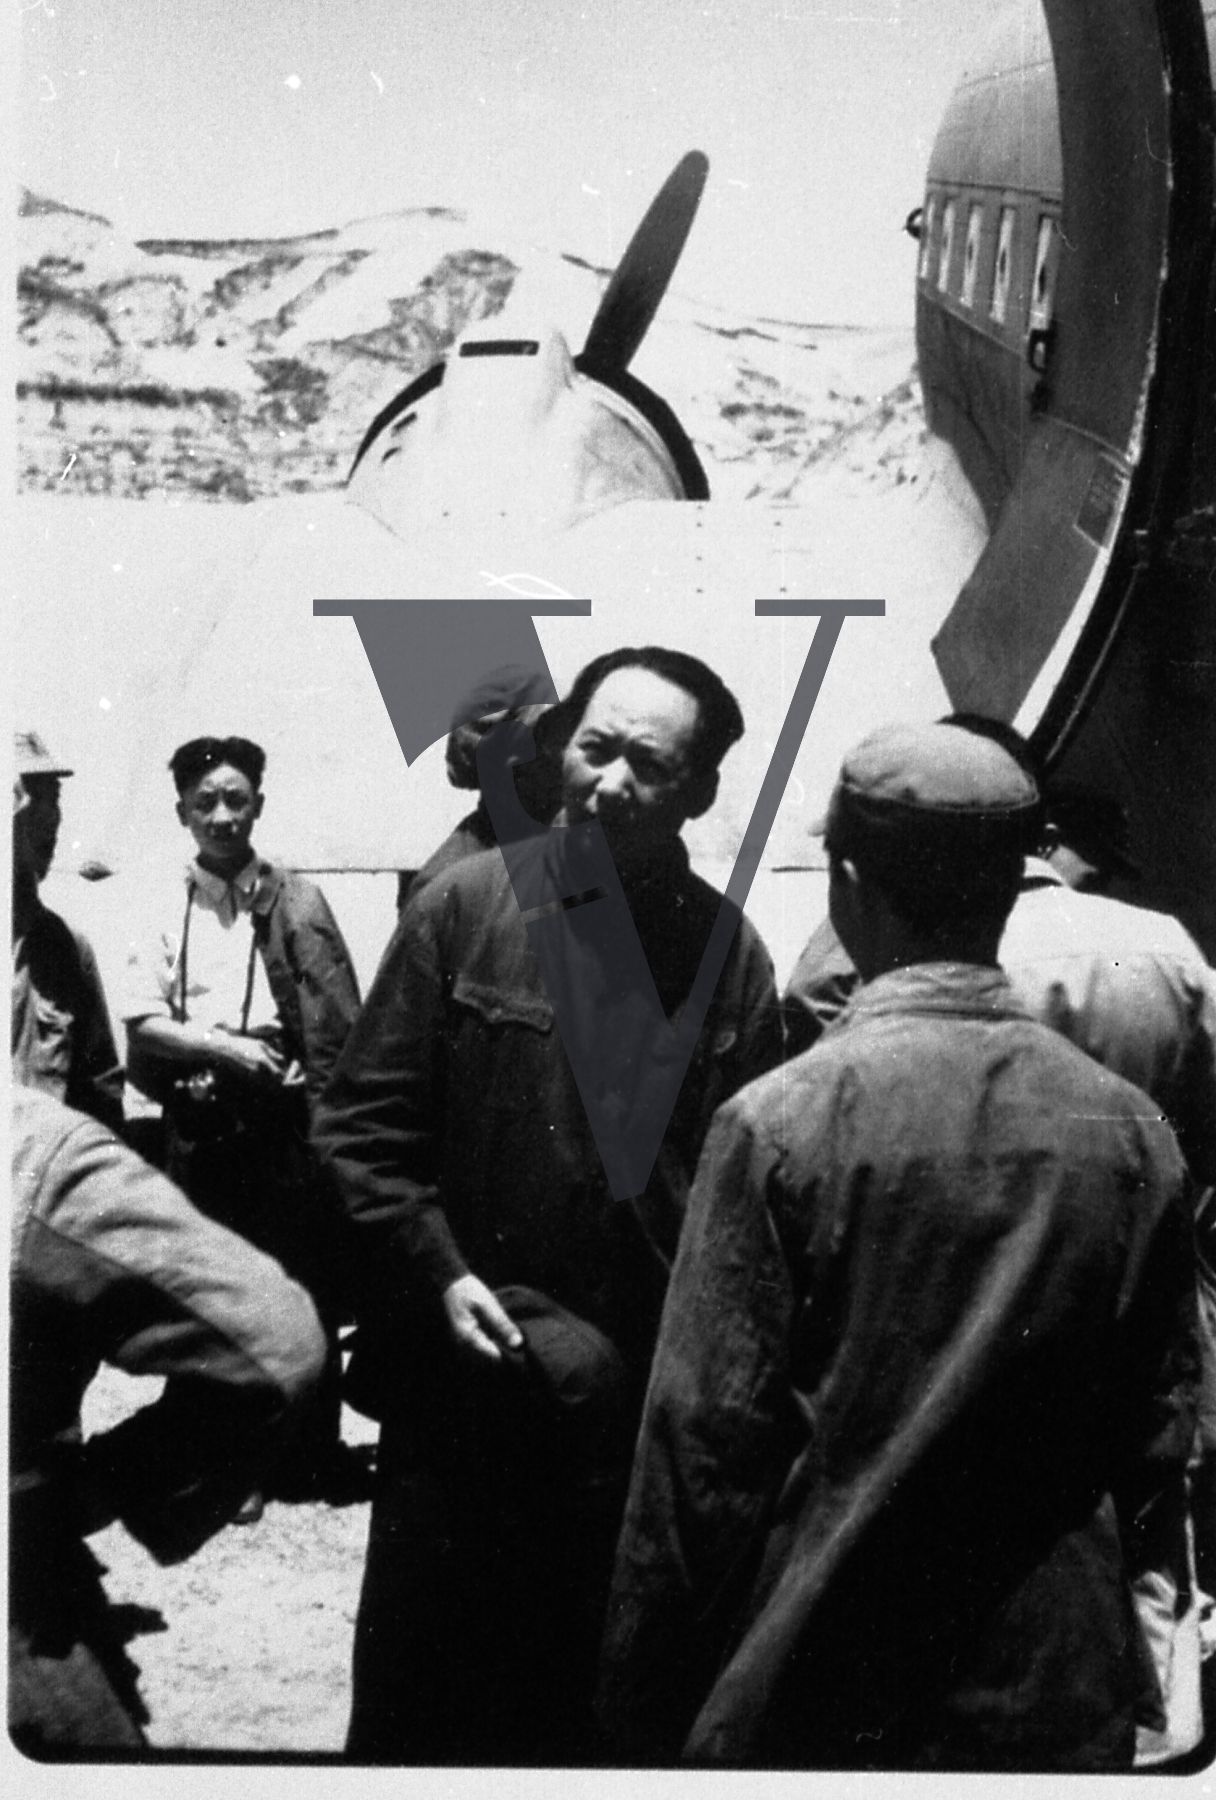 China, Yenan, Mao Zedong, Koji Ariyoshi, Chinese servicemen, plane.